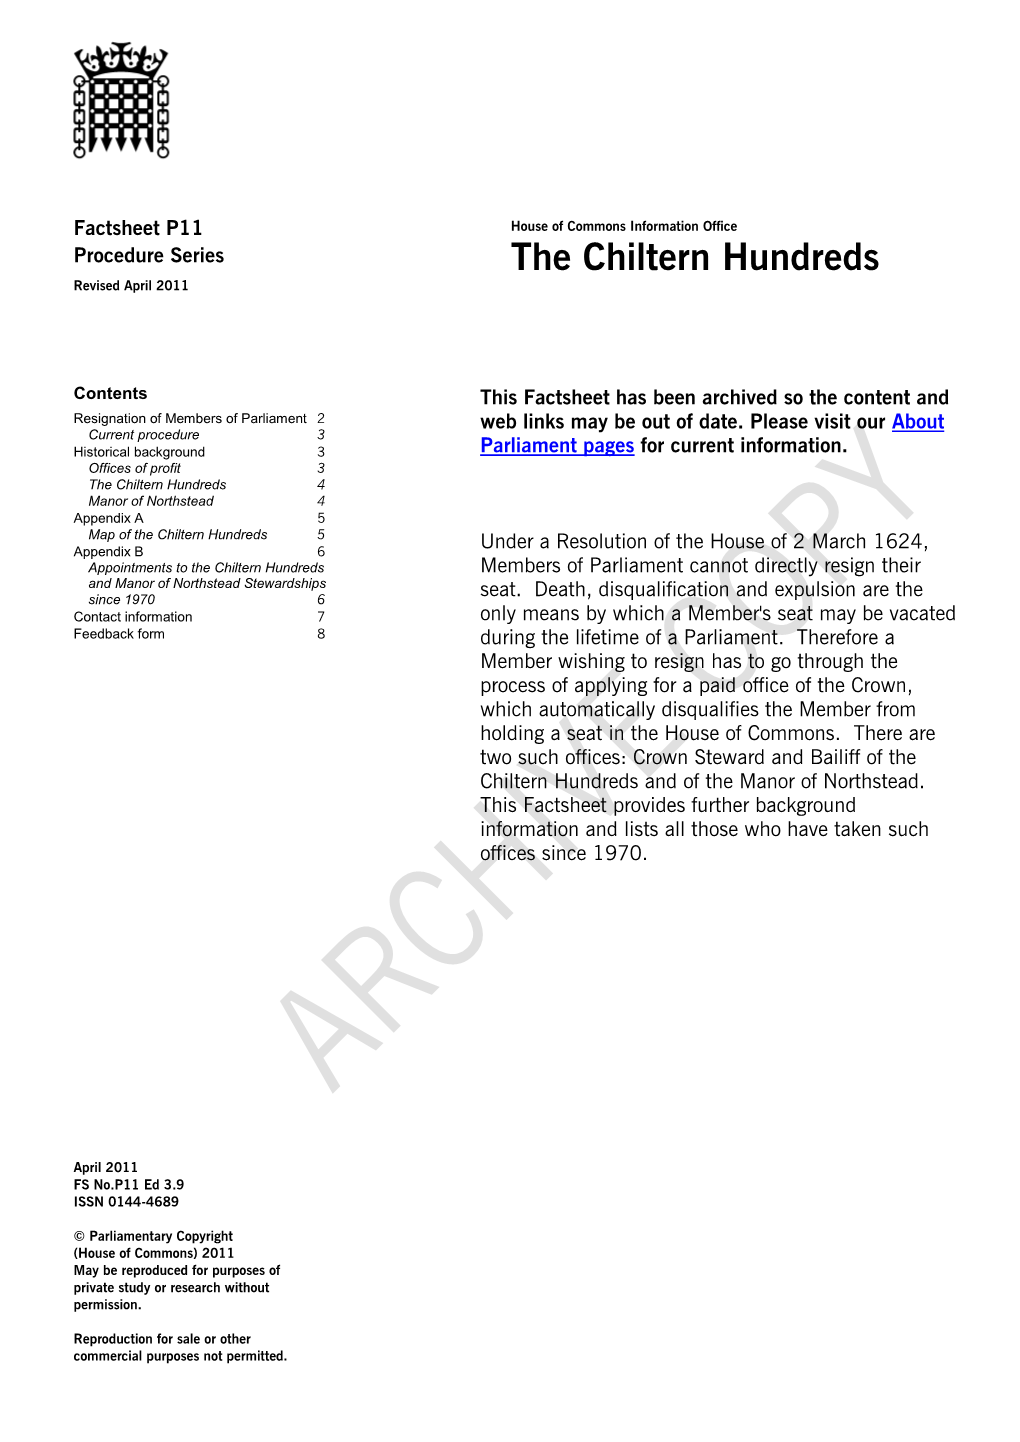 The Chiltern Hundreds Revised April 2011